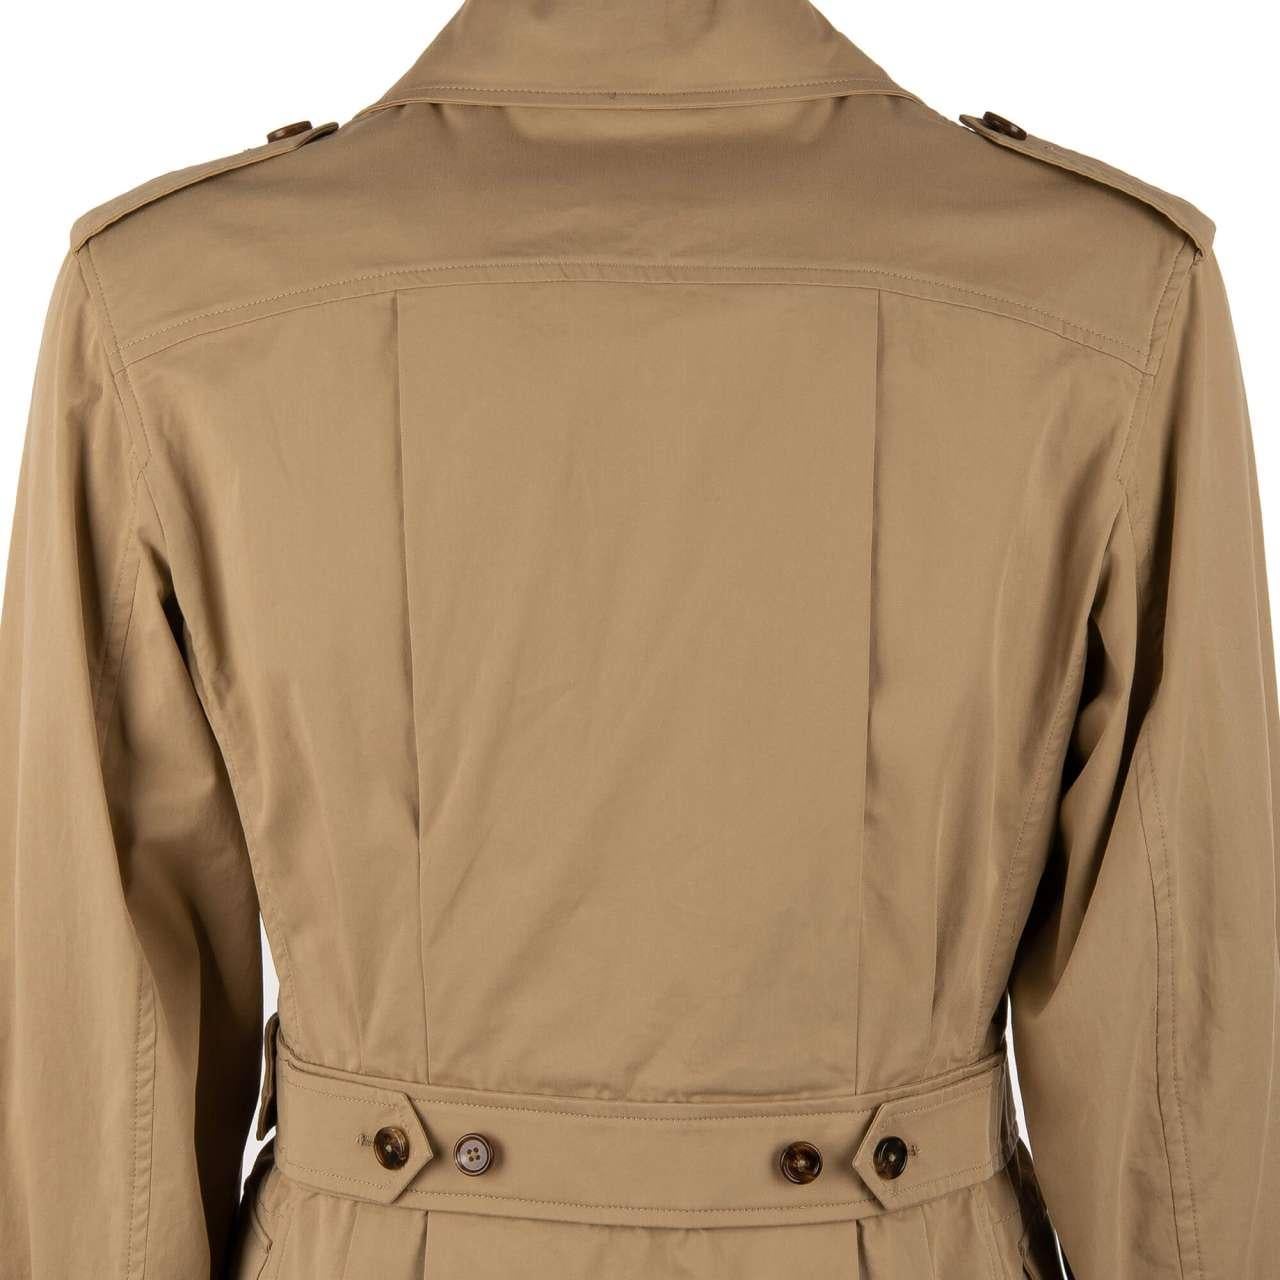 Dolce & Gabbana Canvas Safari Jacket SNEAK PEEK with Belt and Pockets Beige 46 For Sale 3